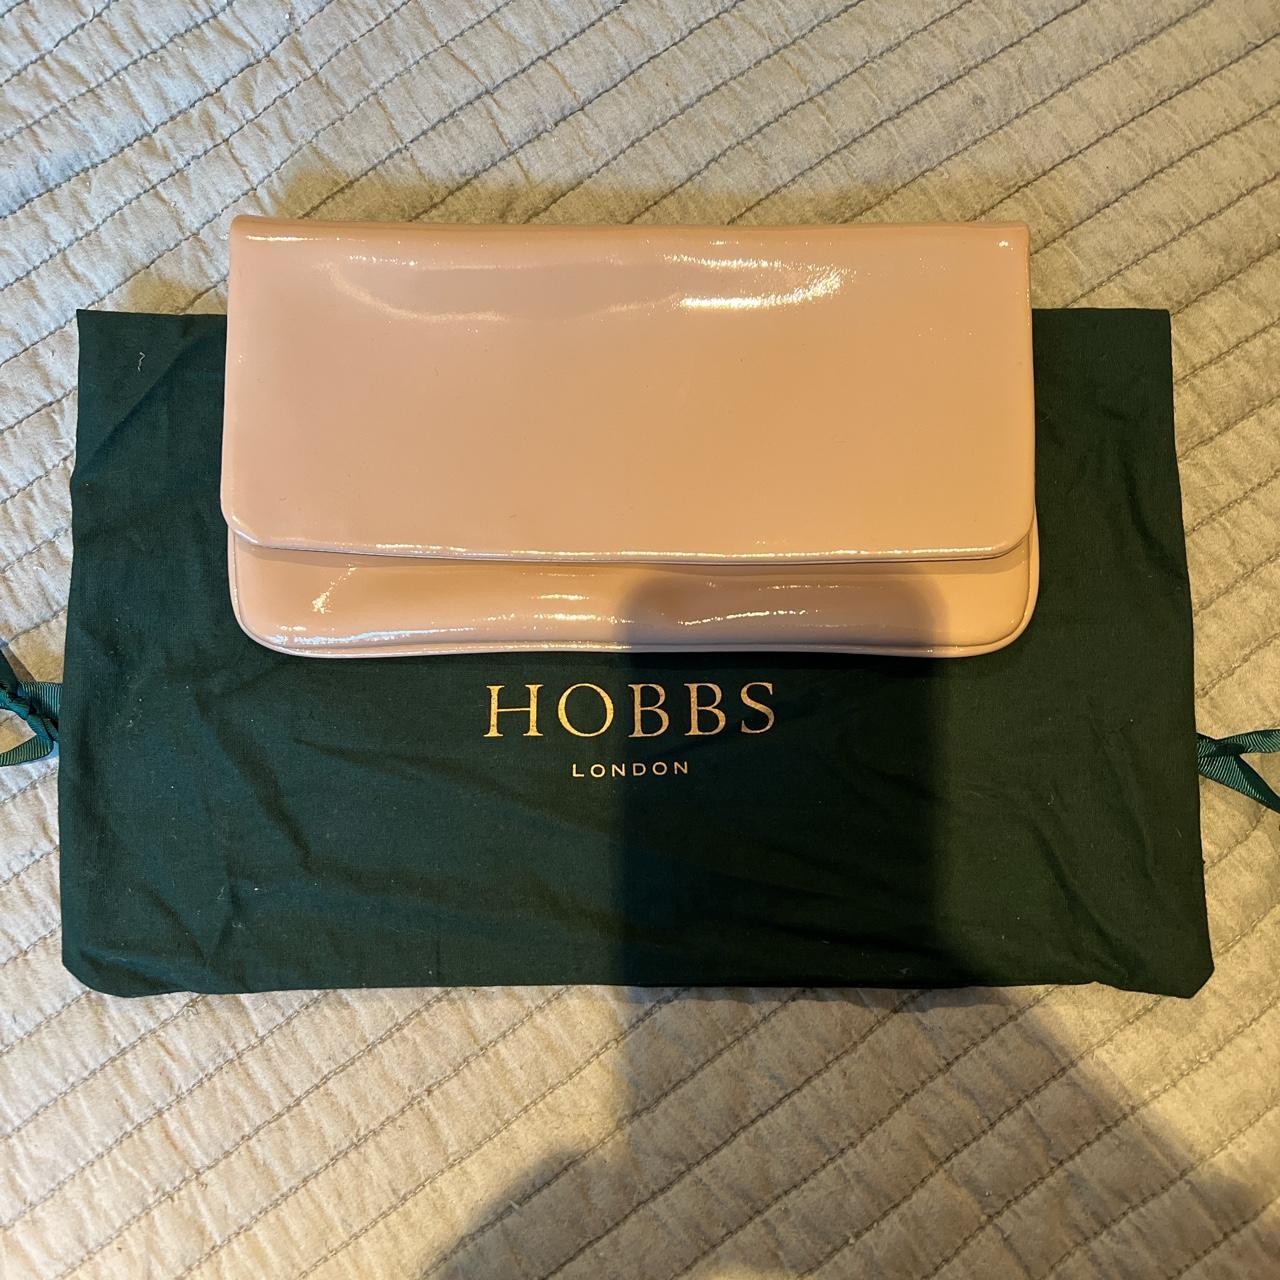 Hobbs leather patent clutch bag in light nude -... - Depop